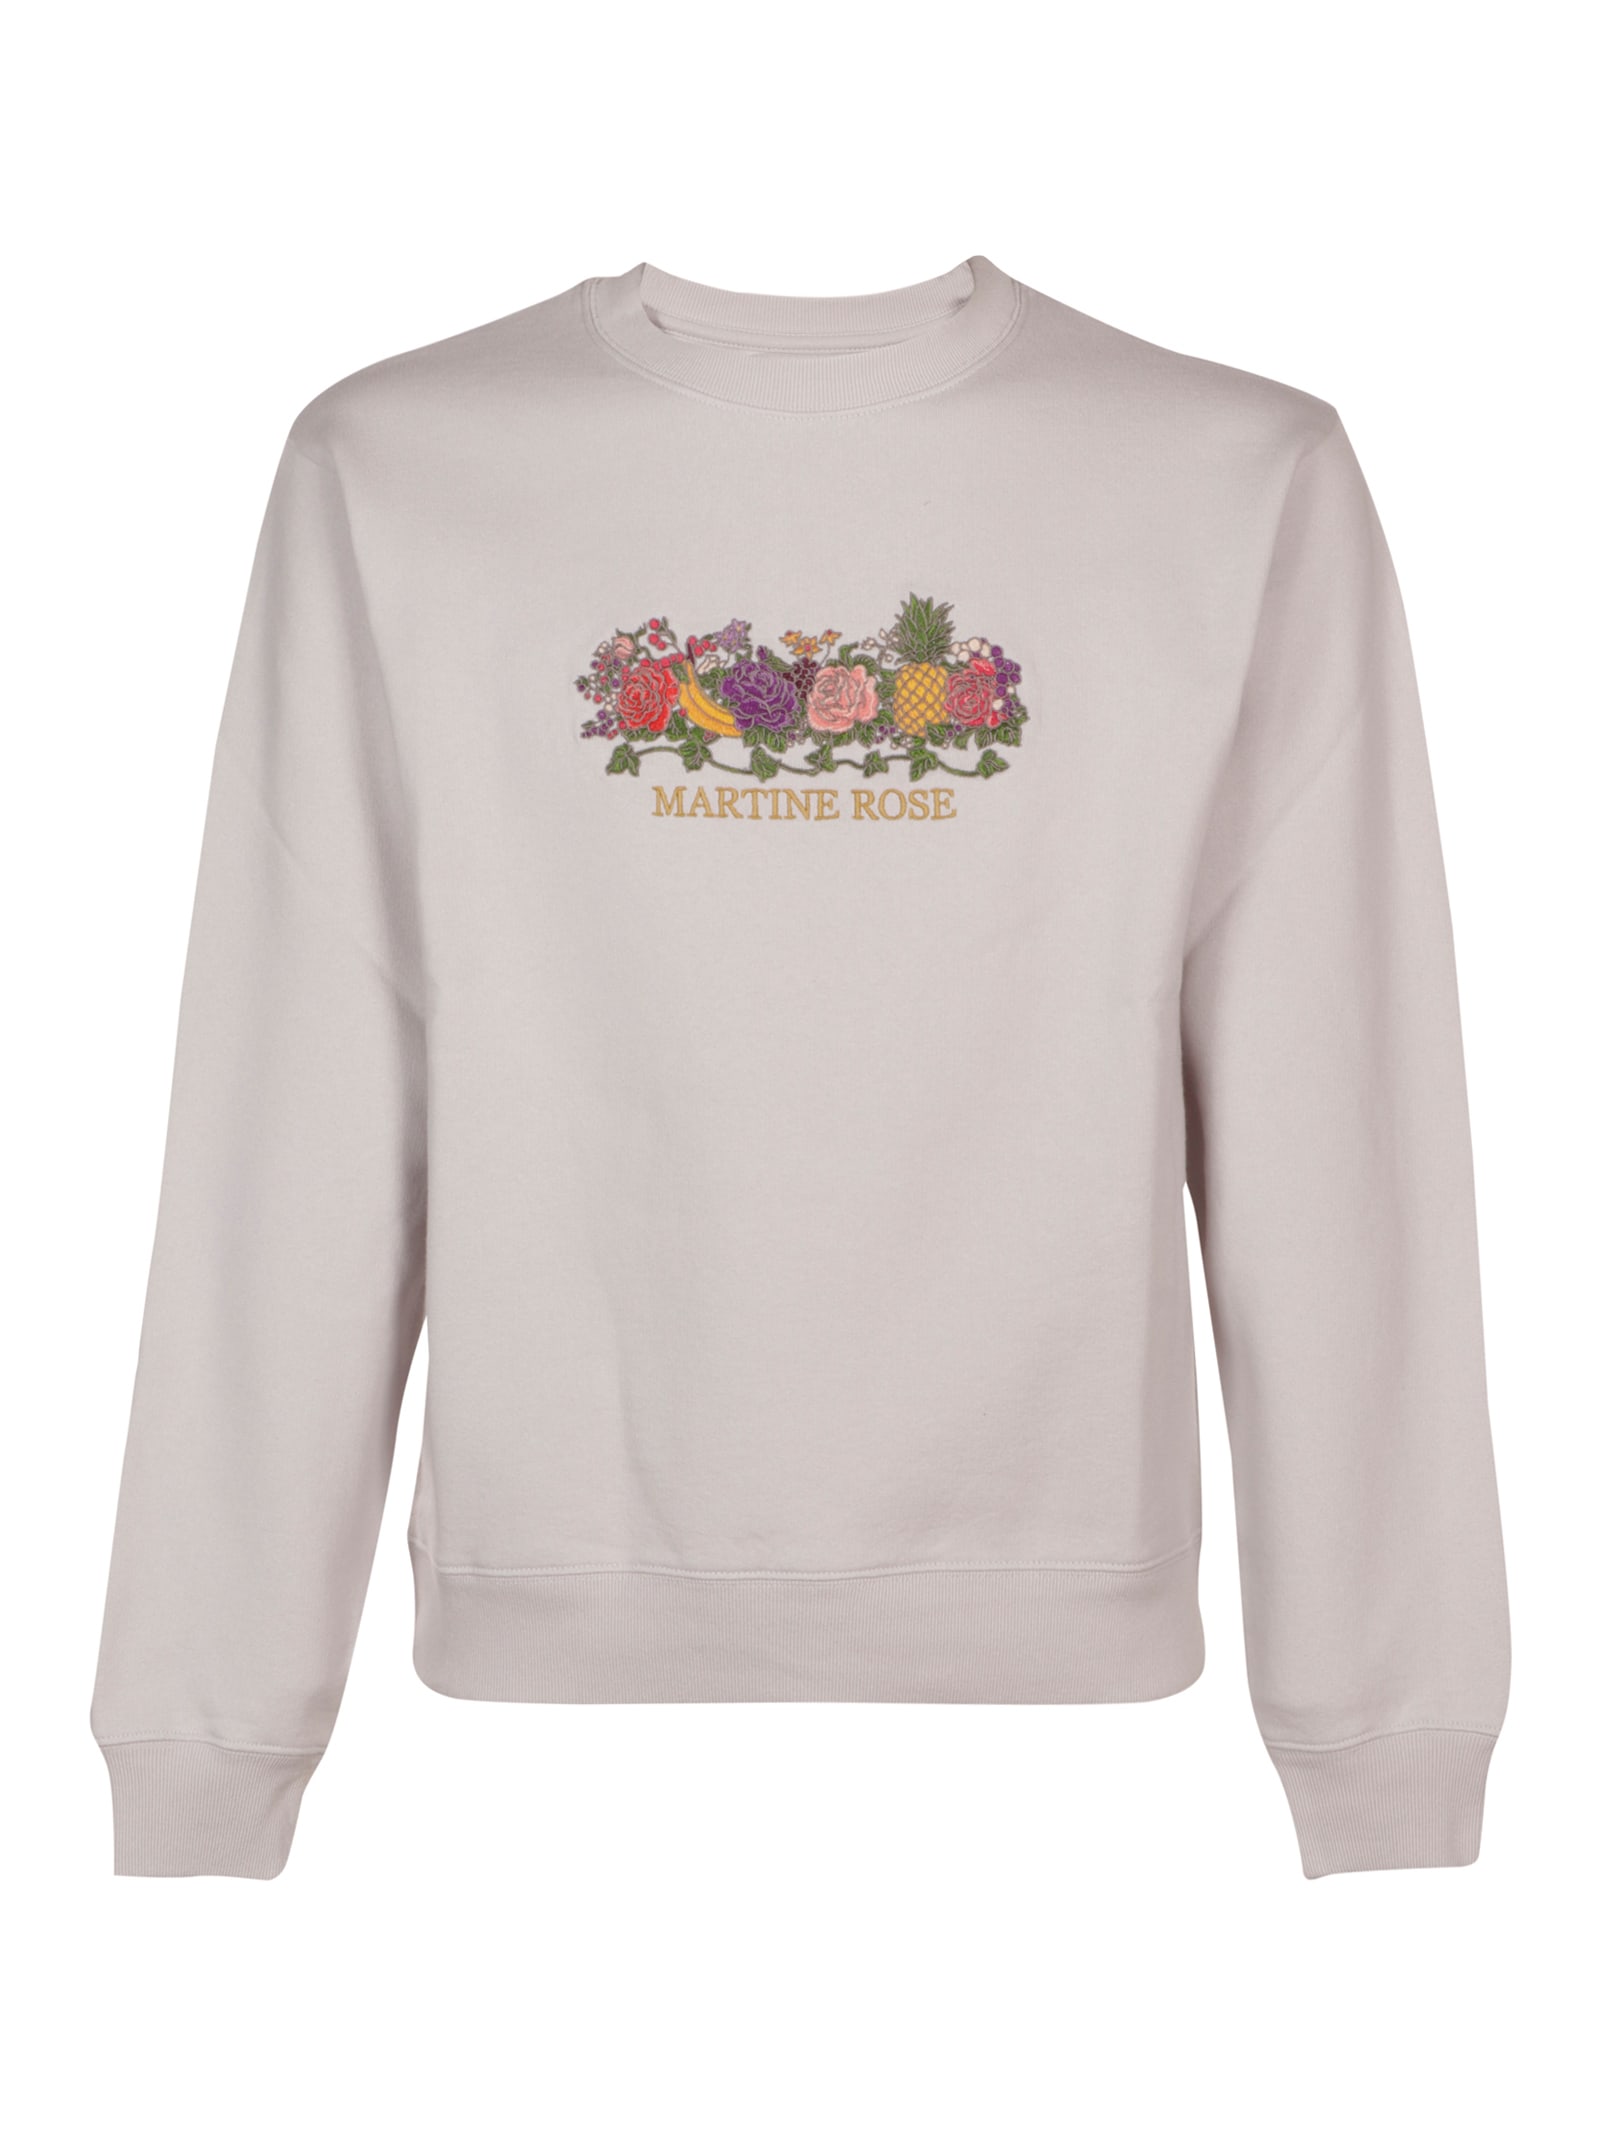 Martine Rose Classic Crew Sweatshirt Embroidery